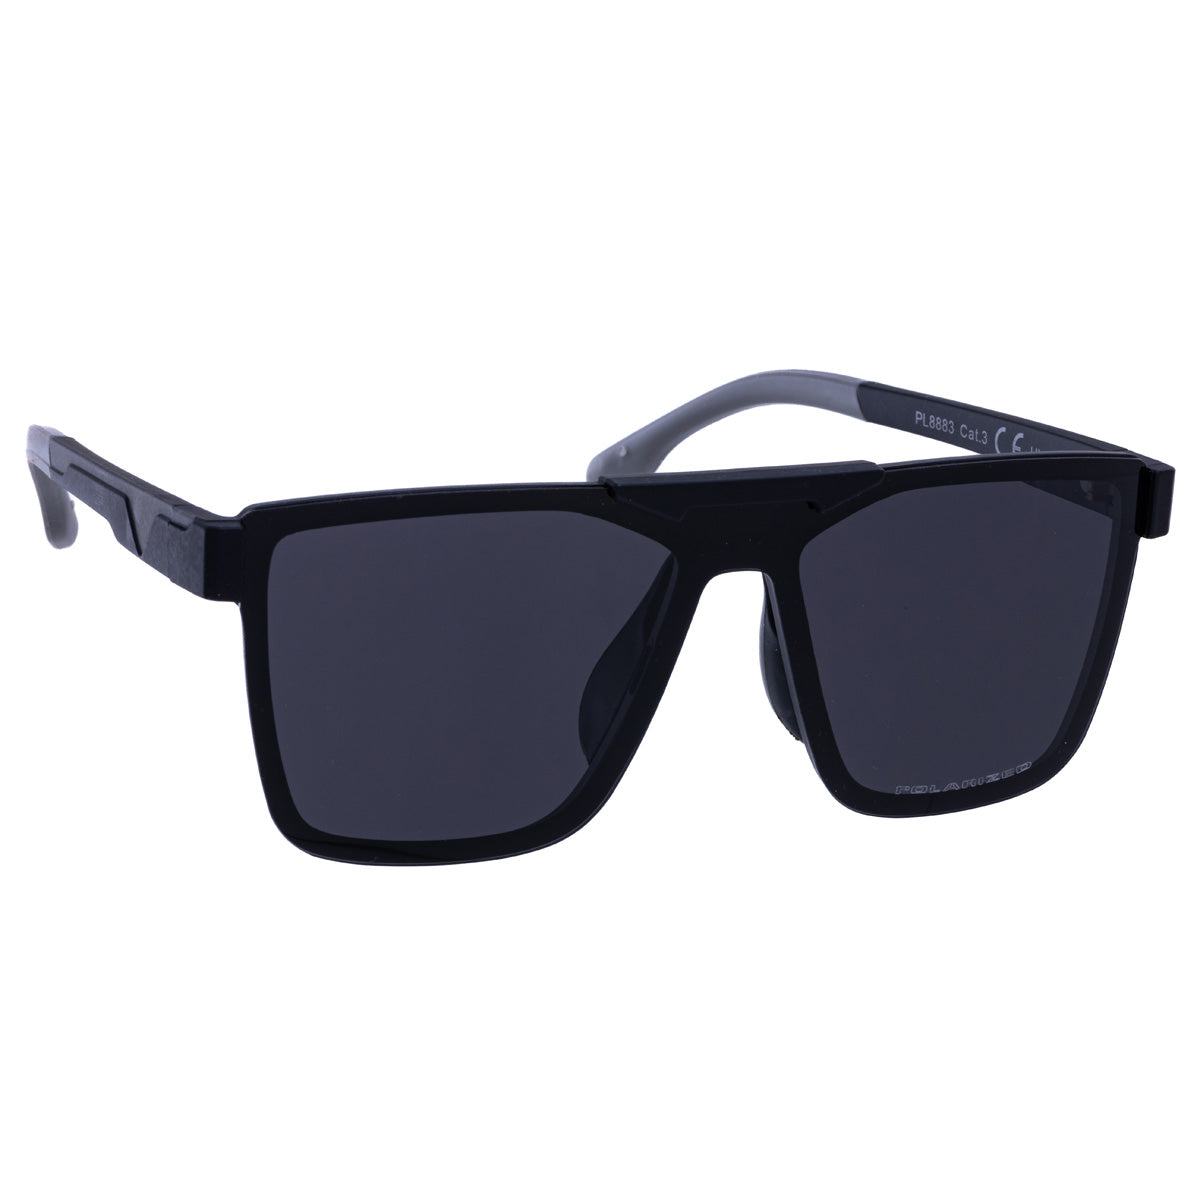 Polarised flat top sunglasses